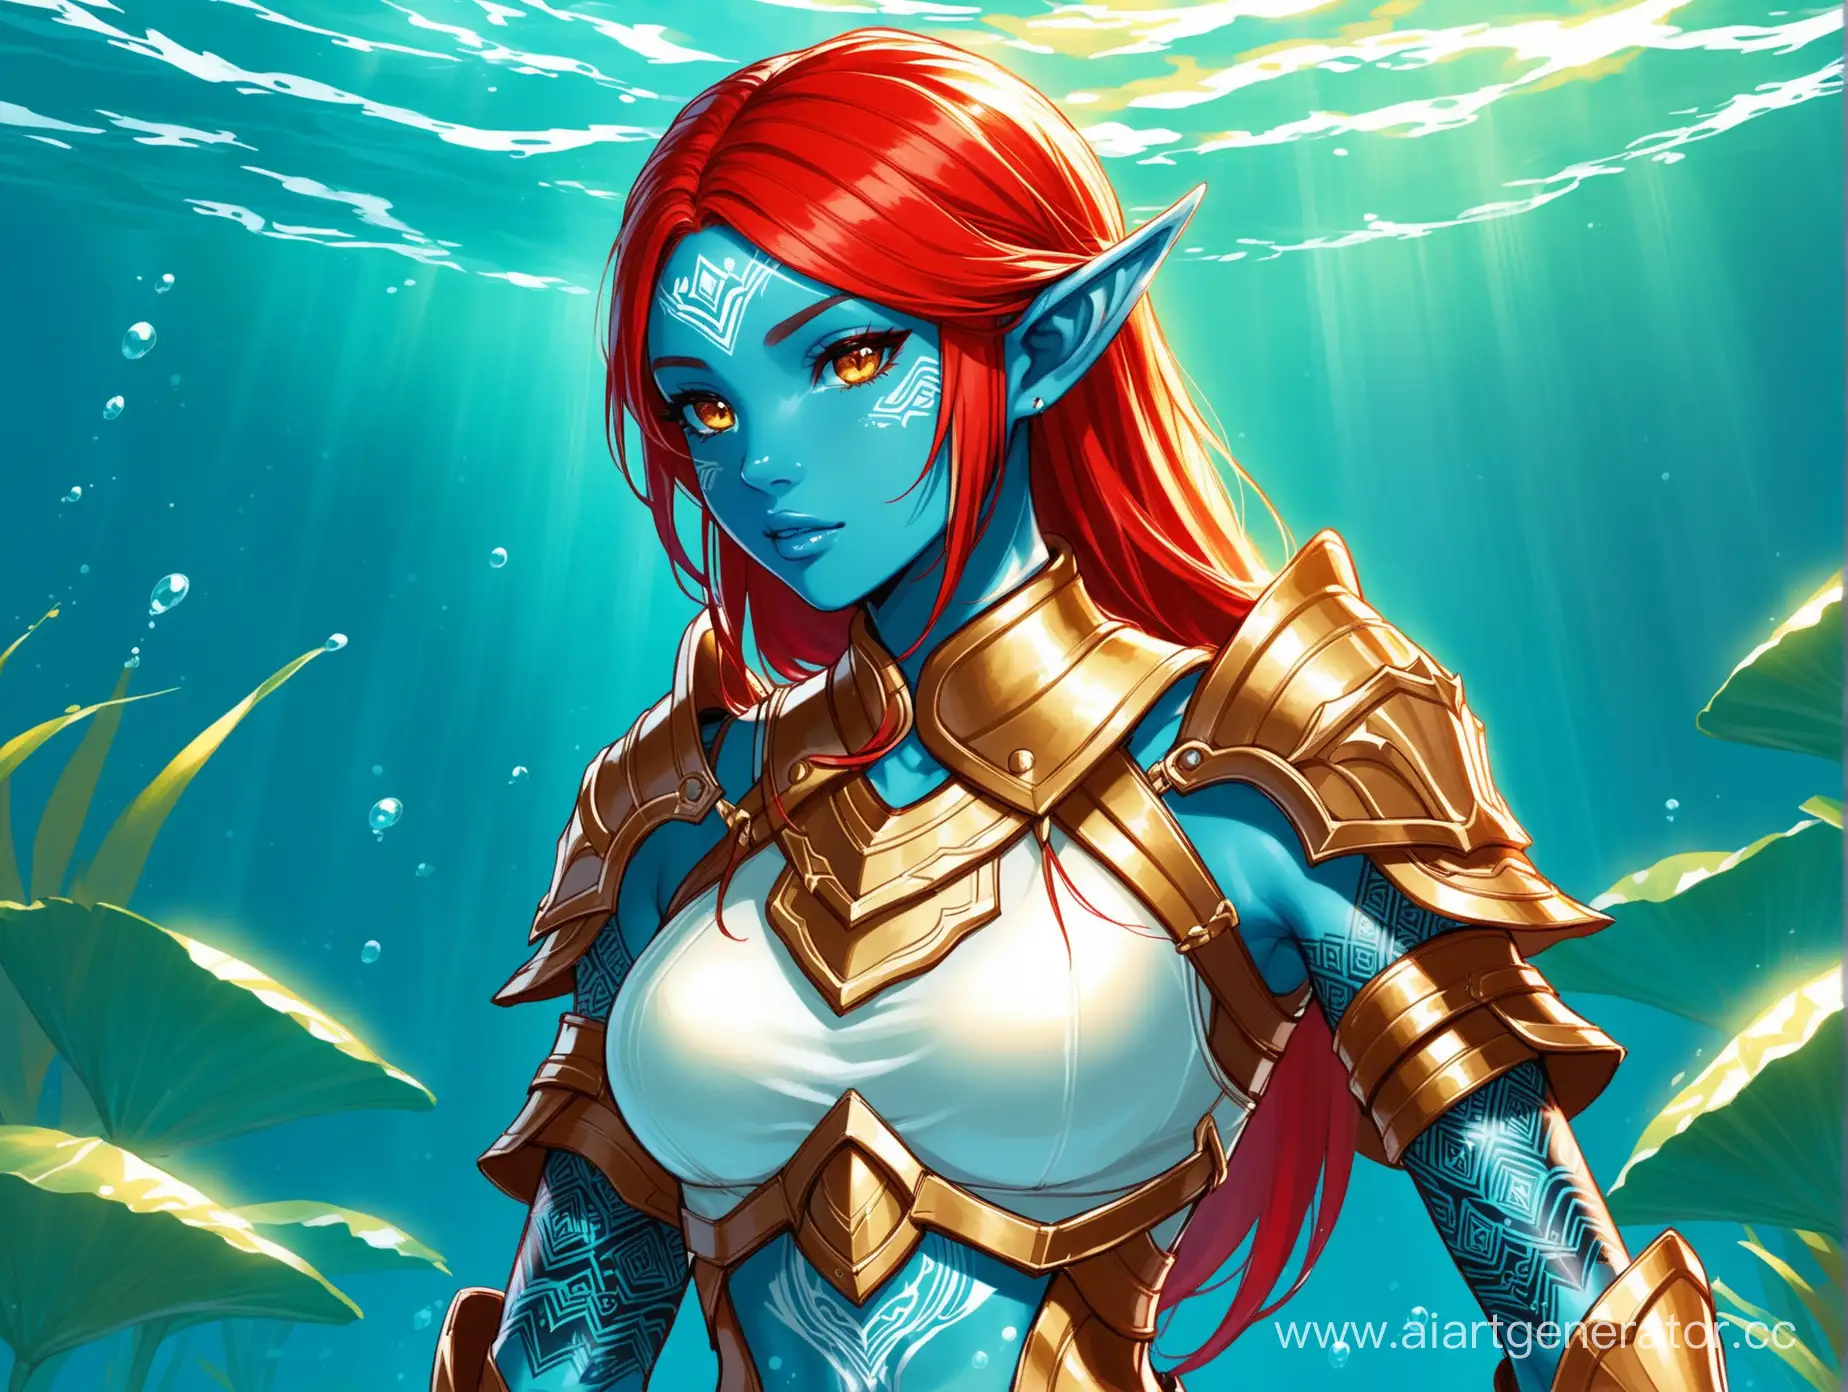 aquatic elf ranger girl in light armor, blue skin with ethnic tattoos, red hair, golden eyes